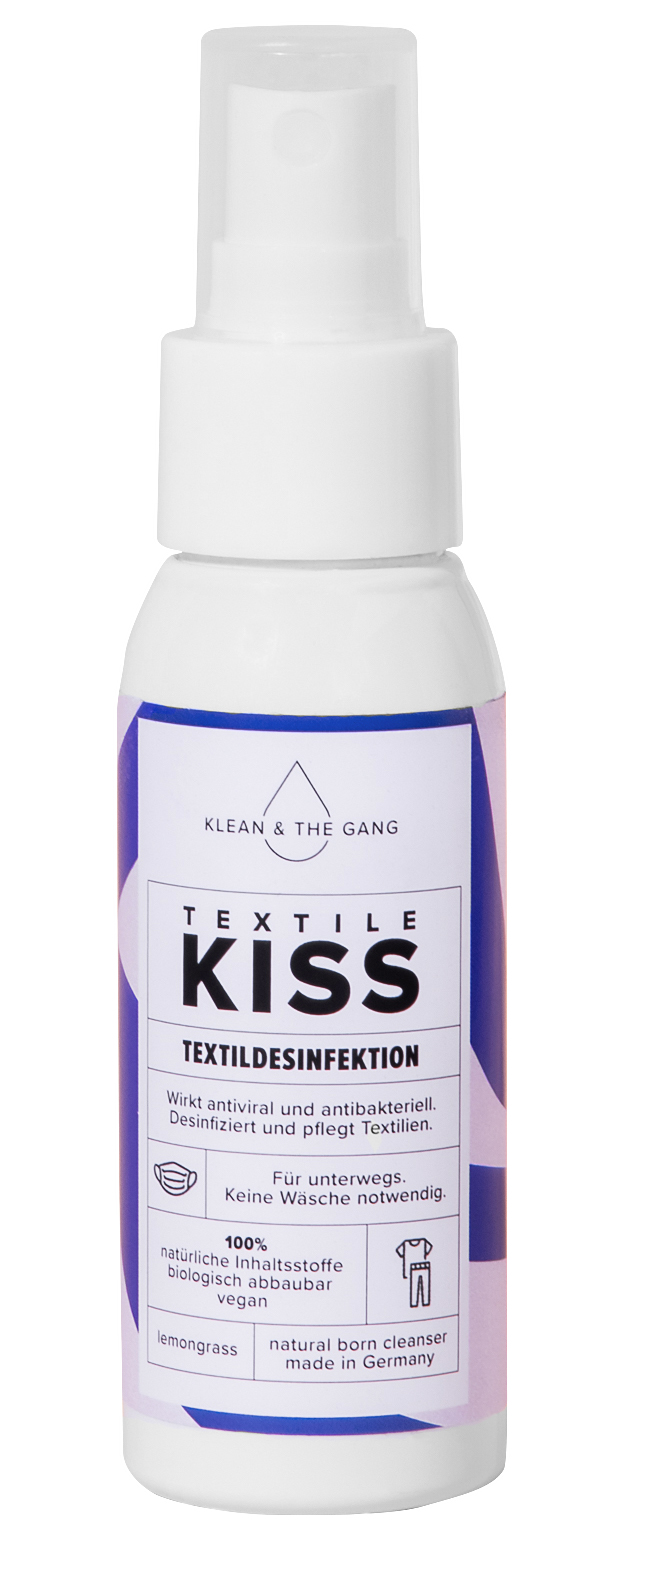 Klean & the Gang Textile Kiss Textilspray 60 ml